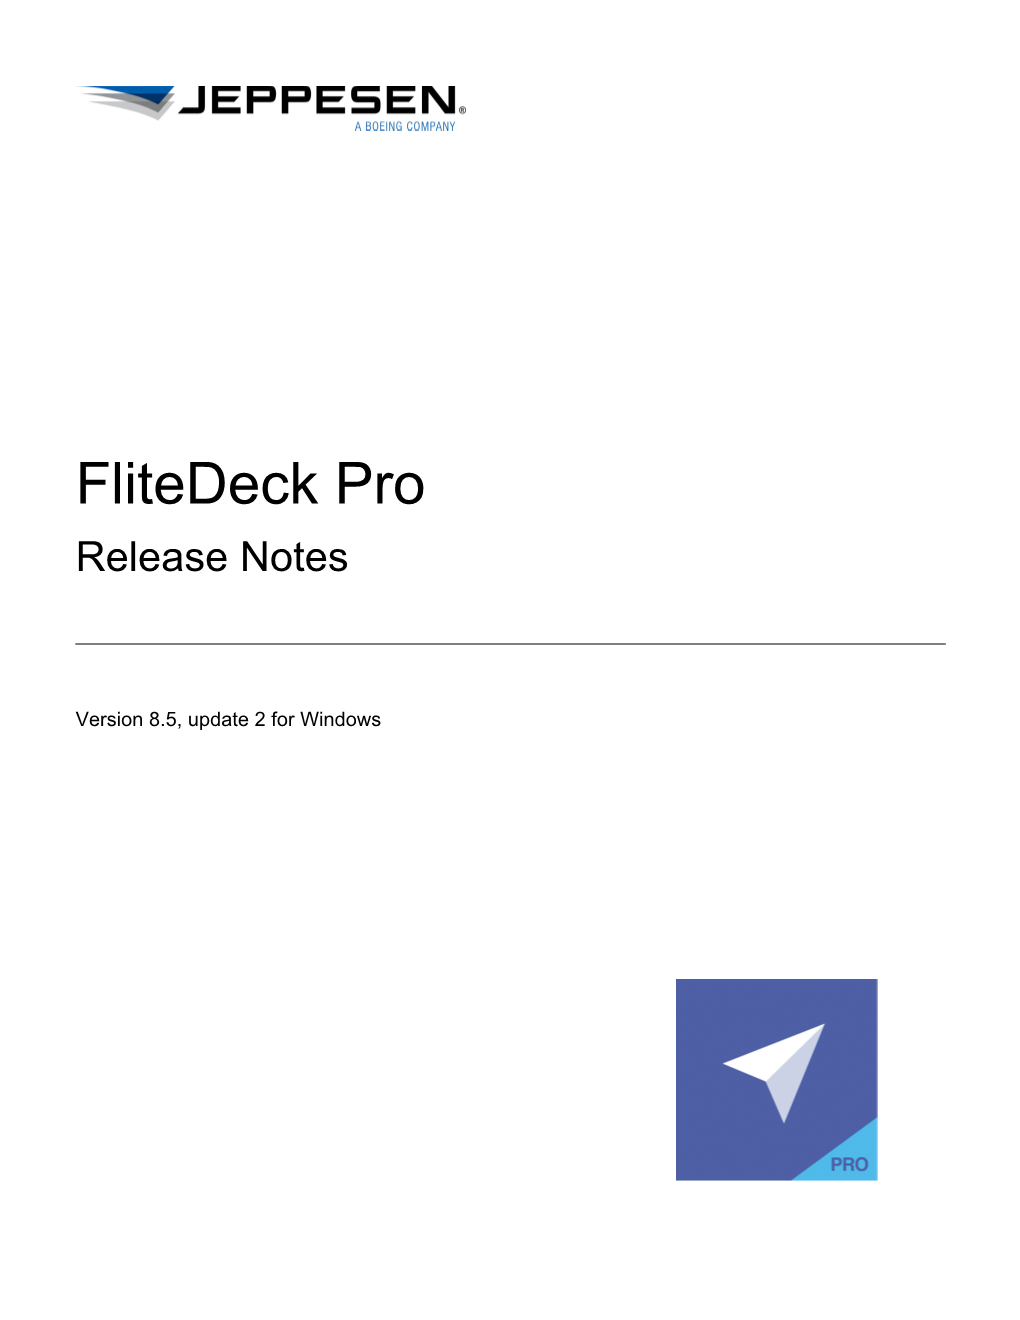 Flitedeck Pro Release Notes